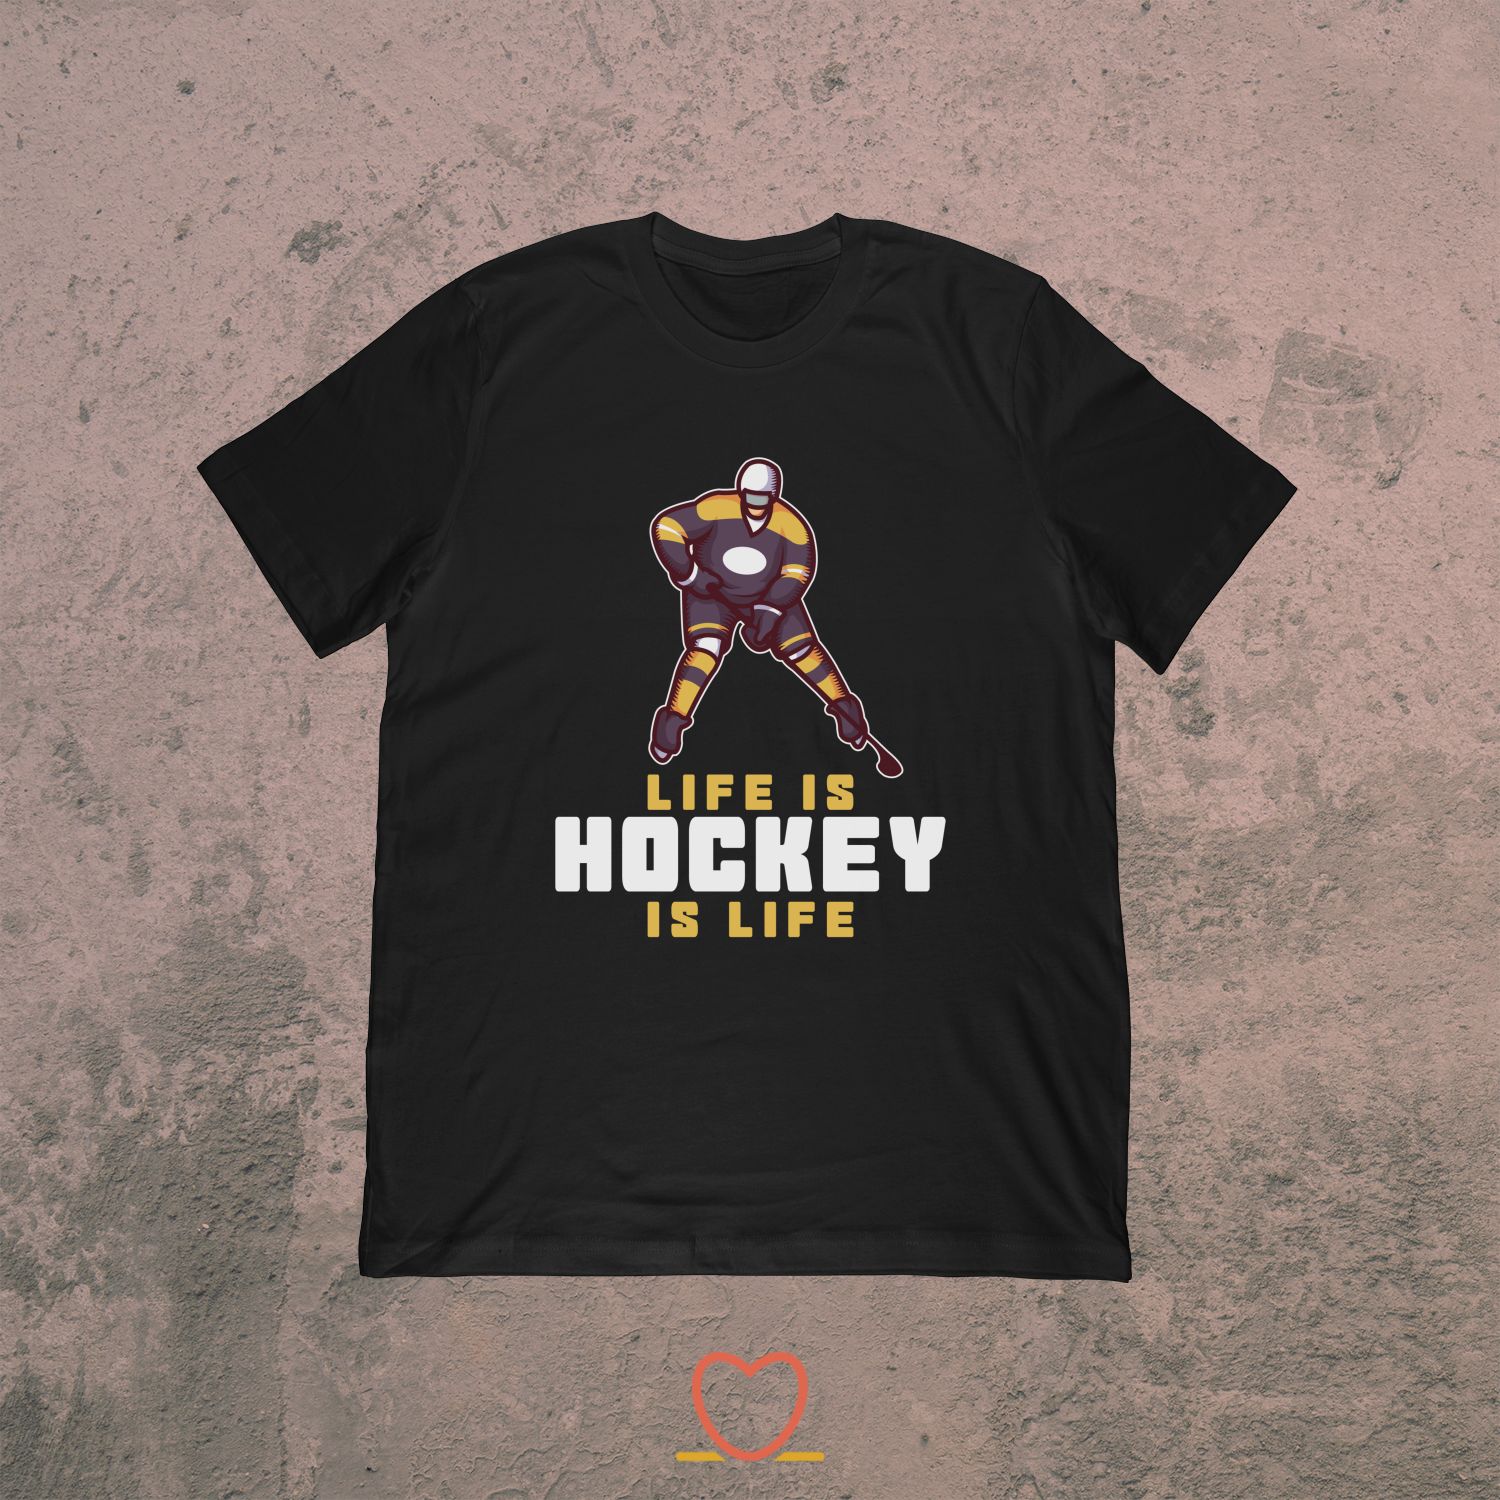 Life is Hockey is Life – Switch + Ice Hockey Tee